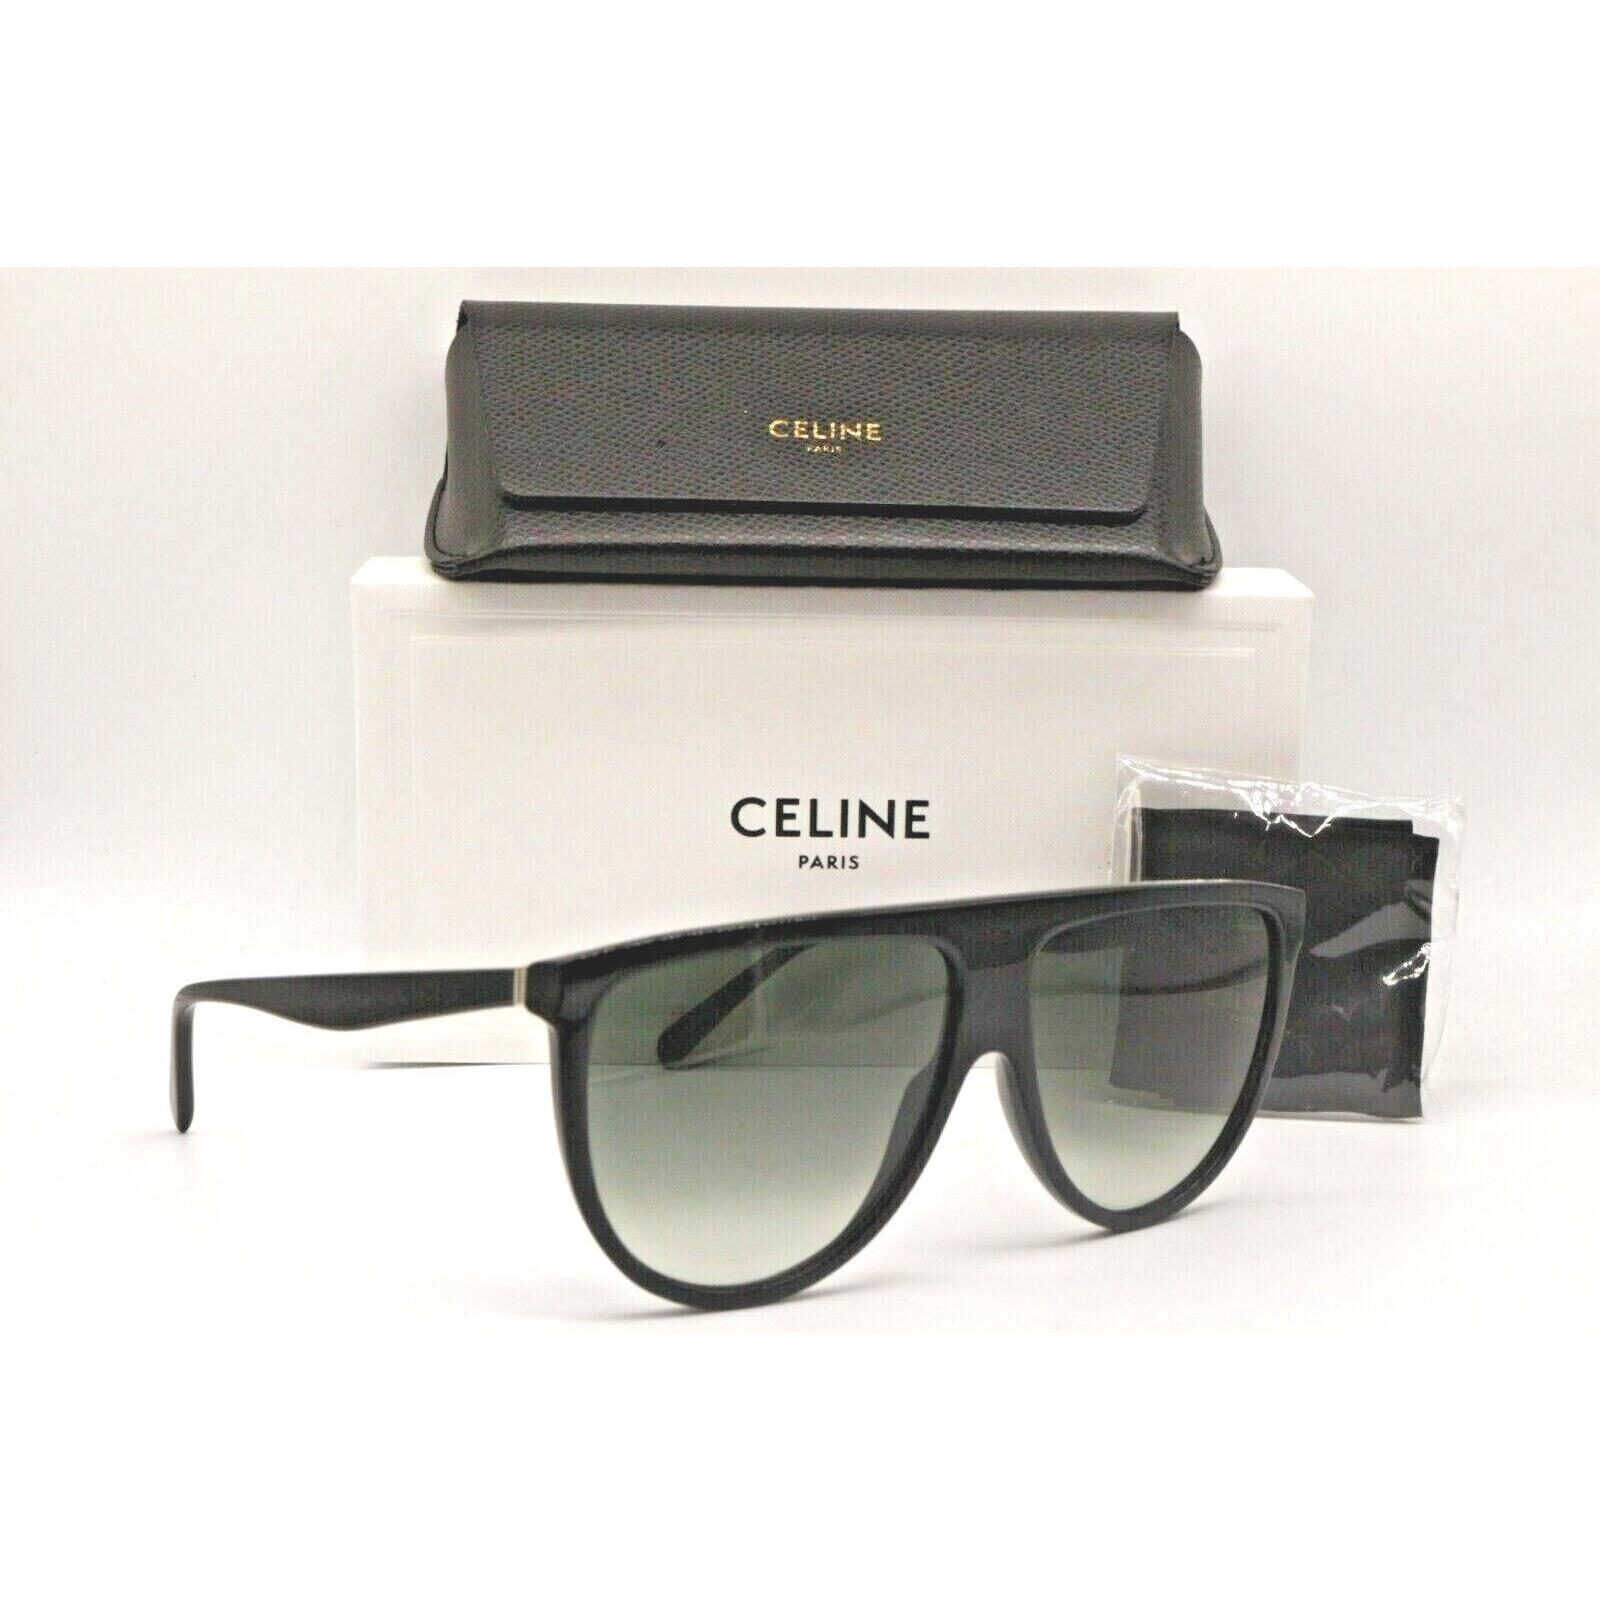 Celine Brand - Shop Celine fashion accessories | Fash Brands - Page 4